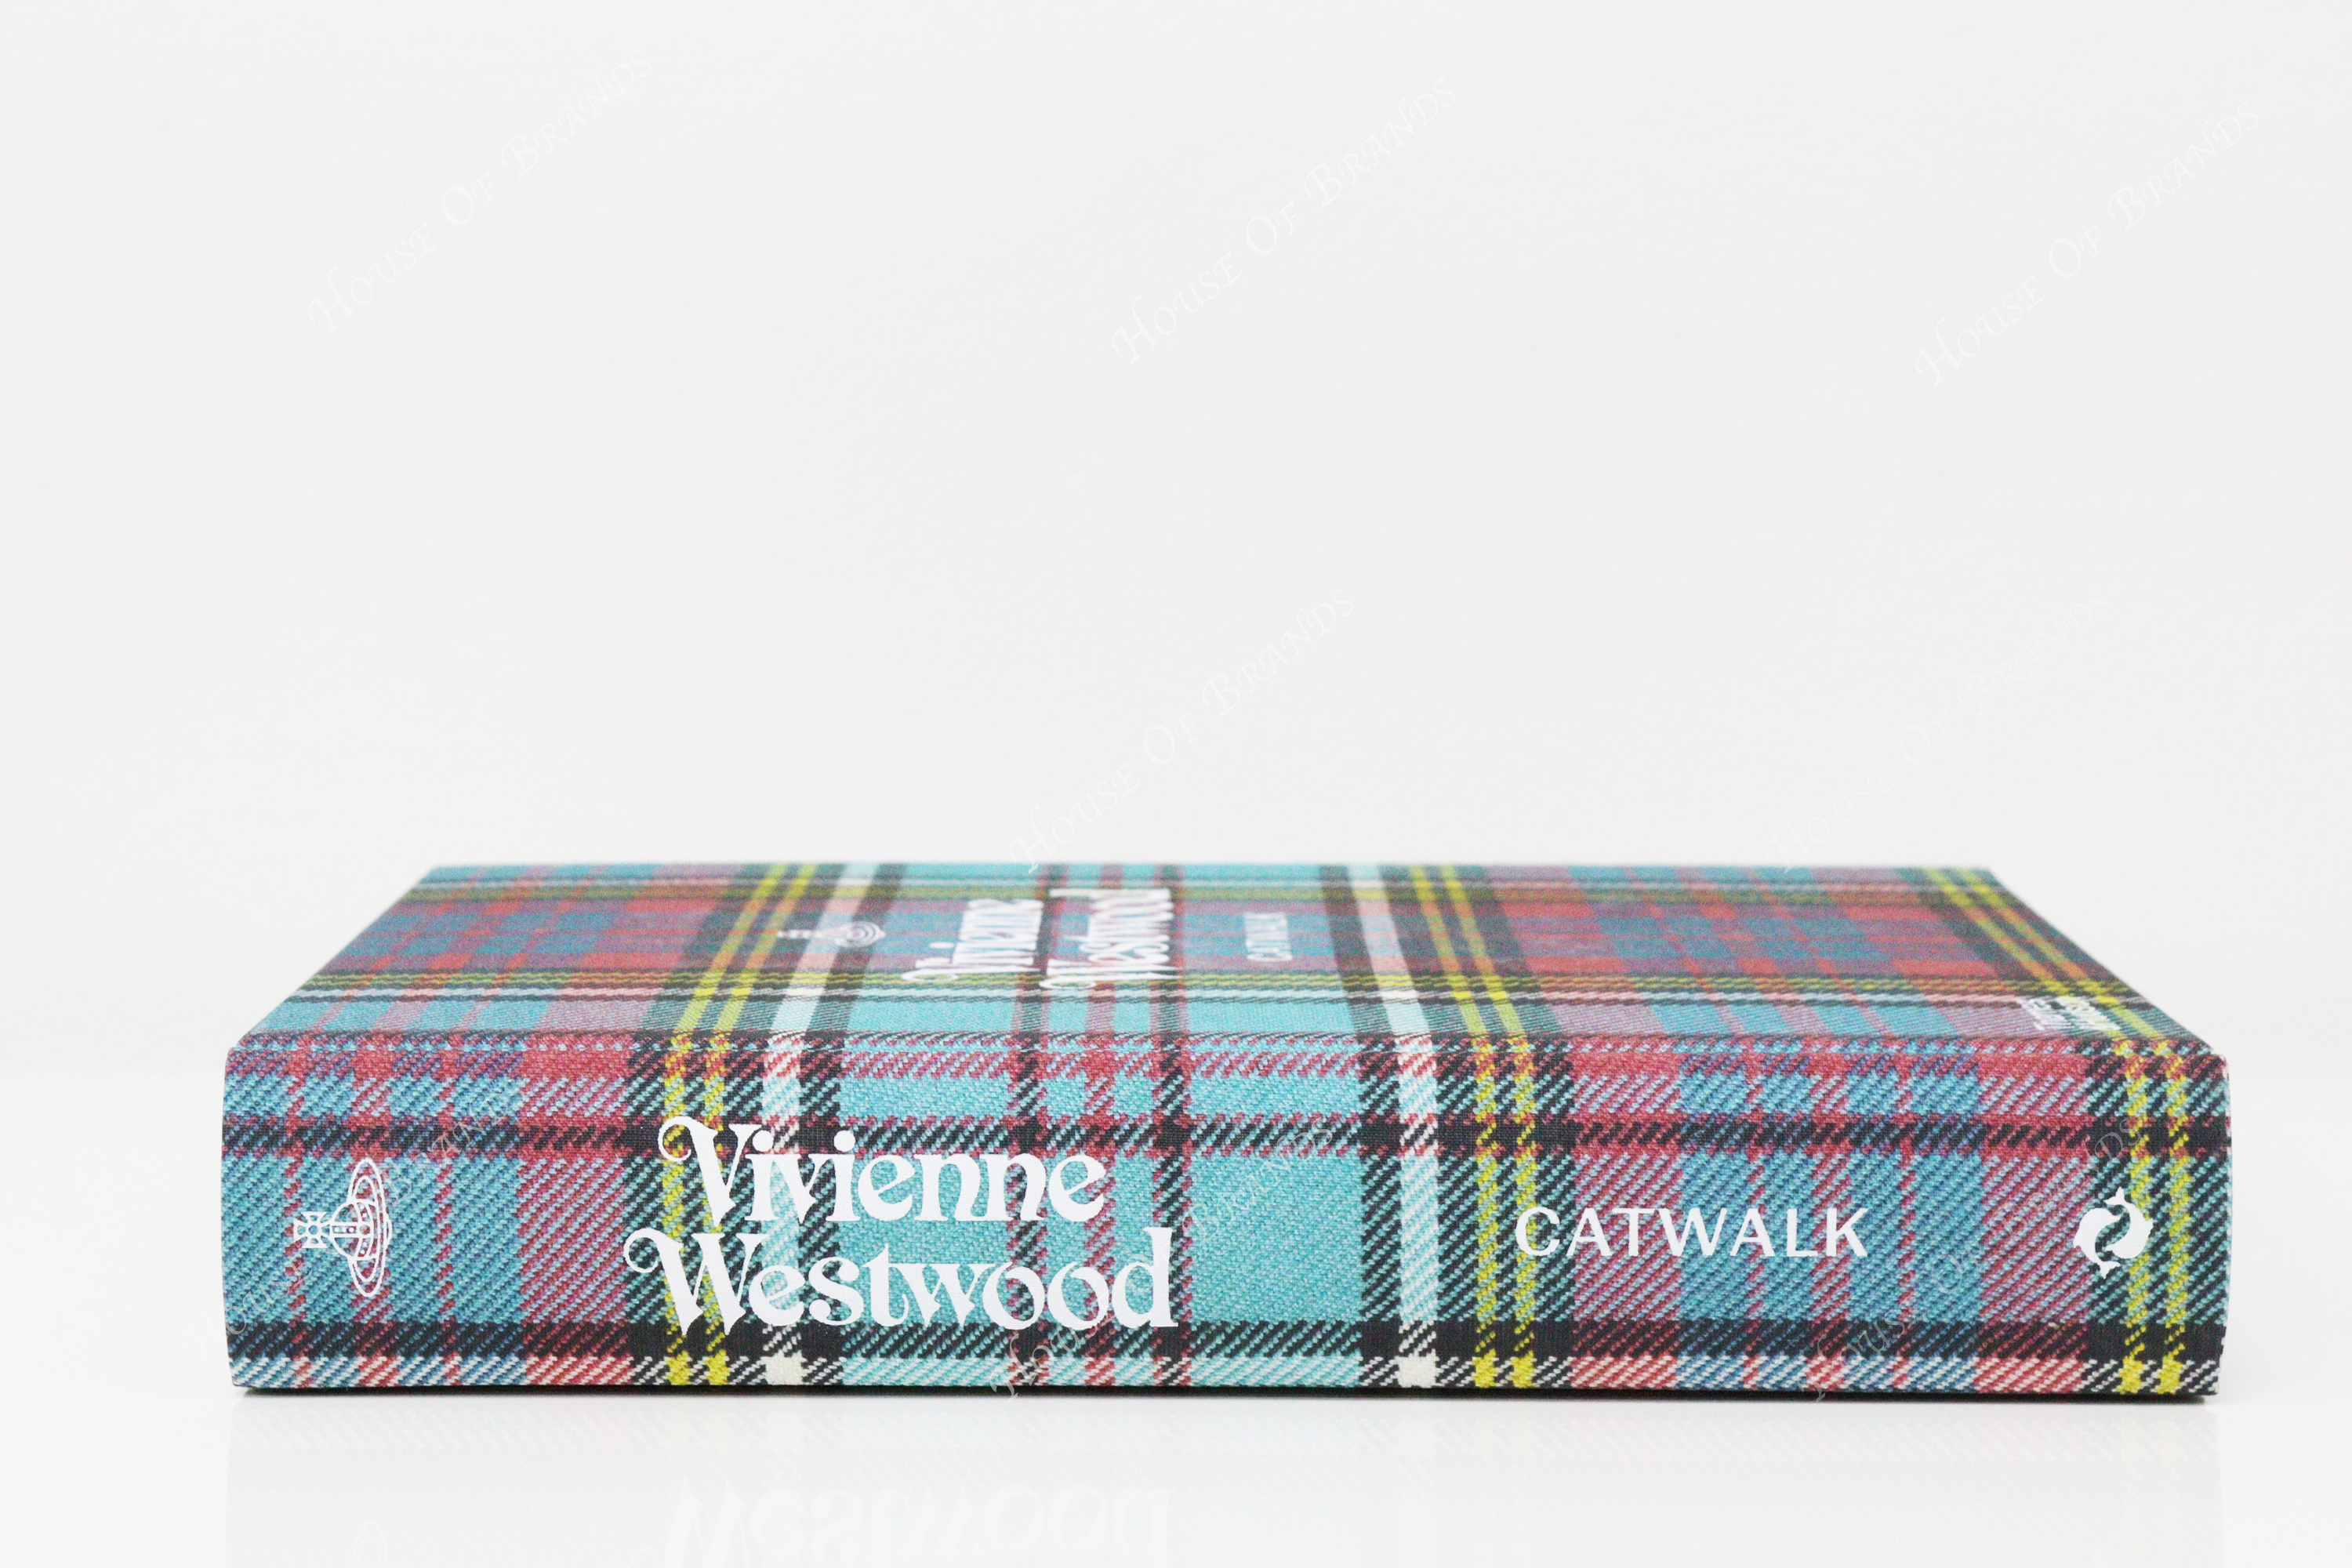 THAMES & HUDSON Vivienne Westwood Catwalk fashion book